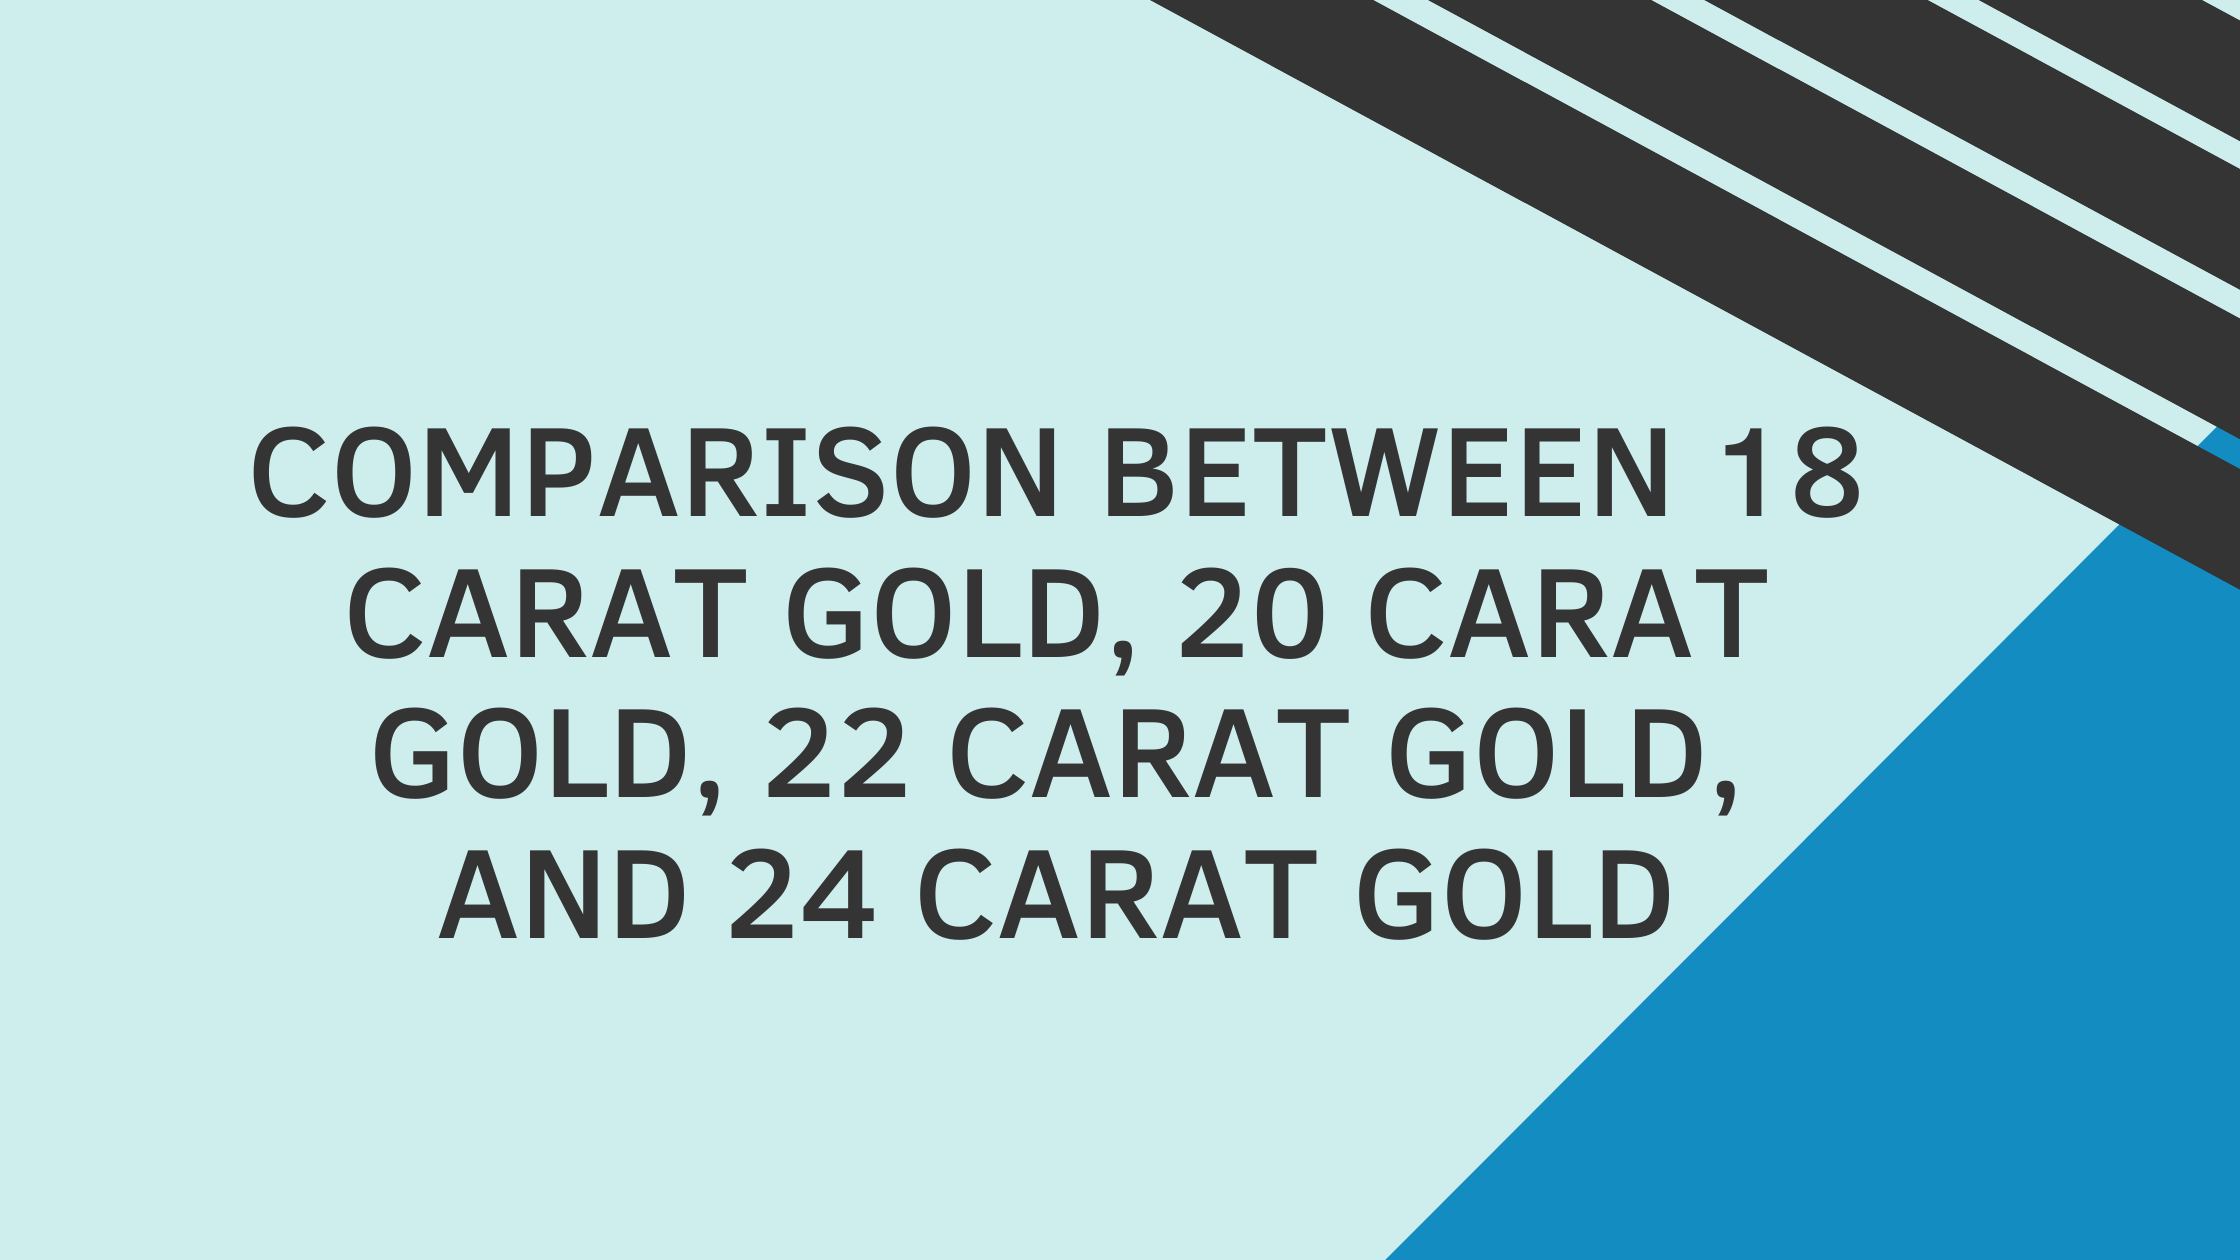 Comparison between Golds